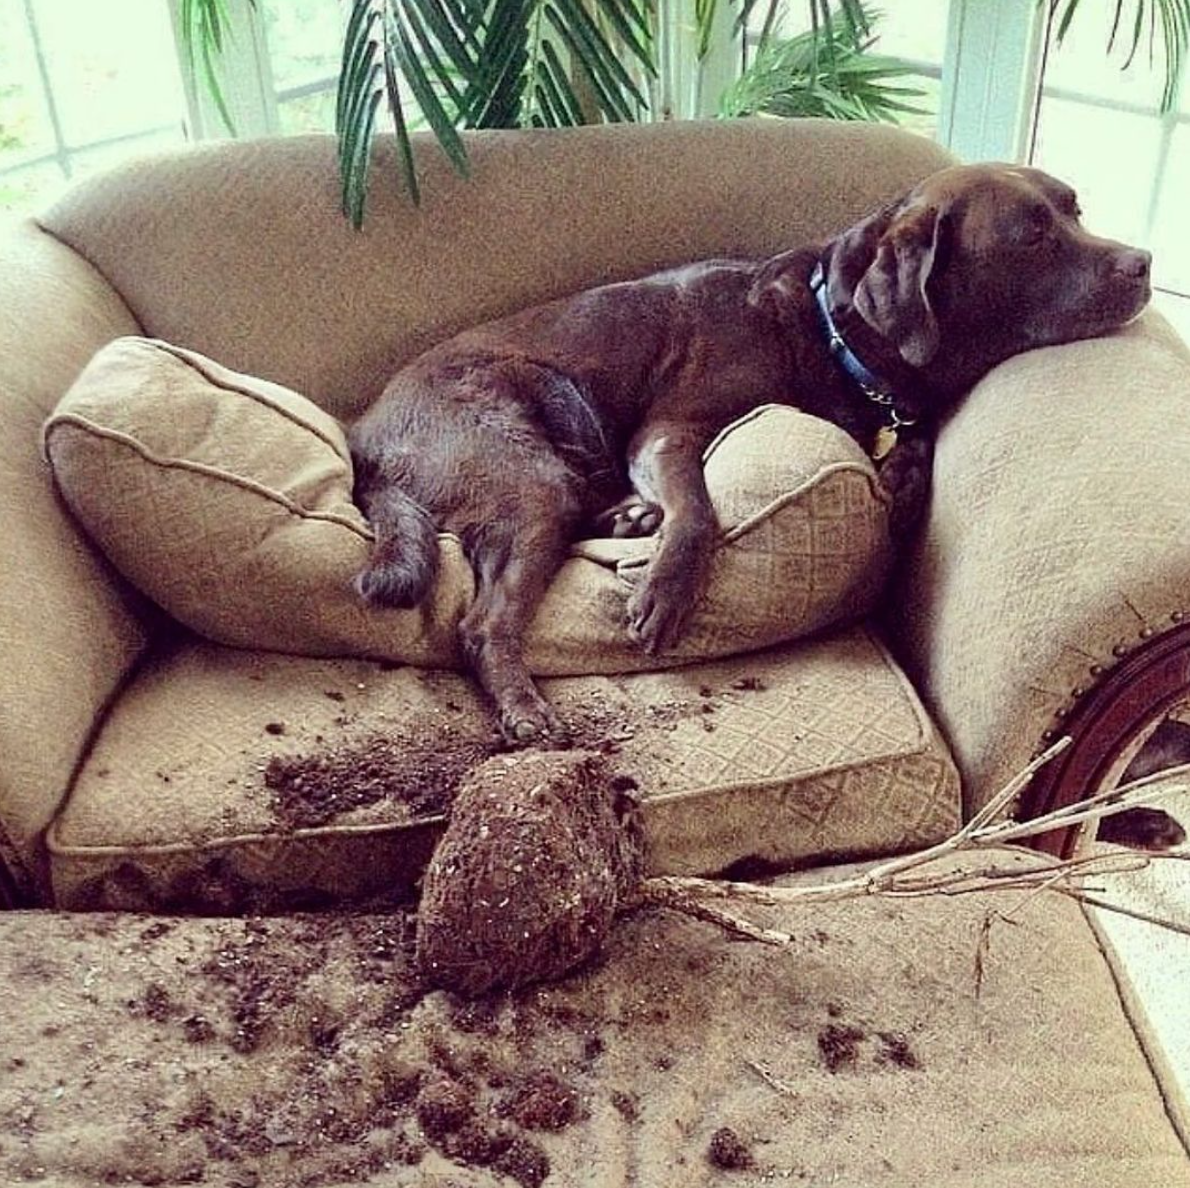 misbehaving-dog-destroys-plant